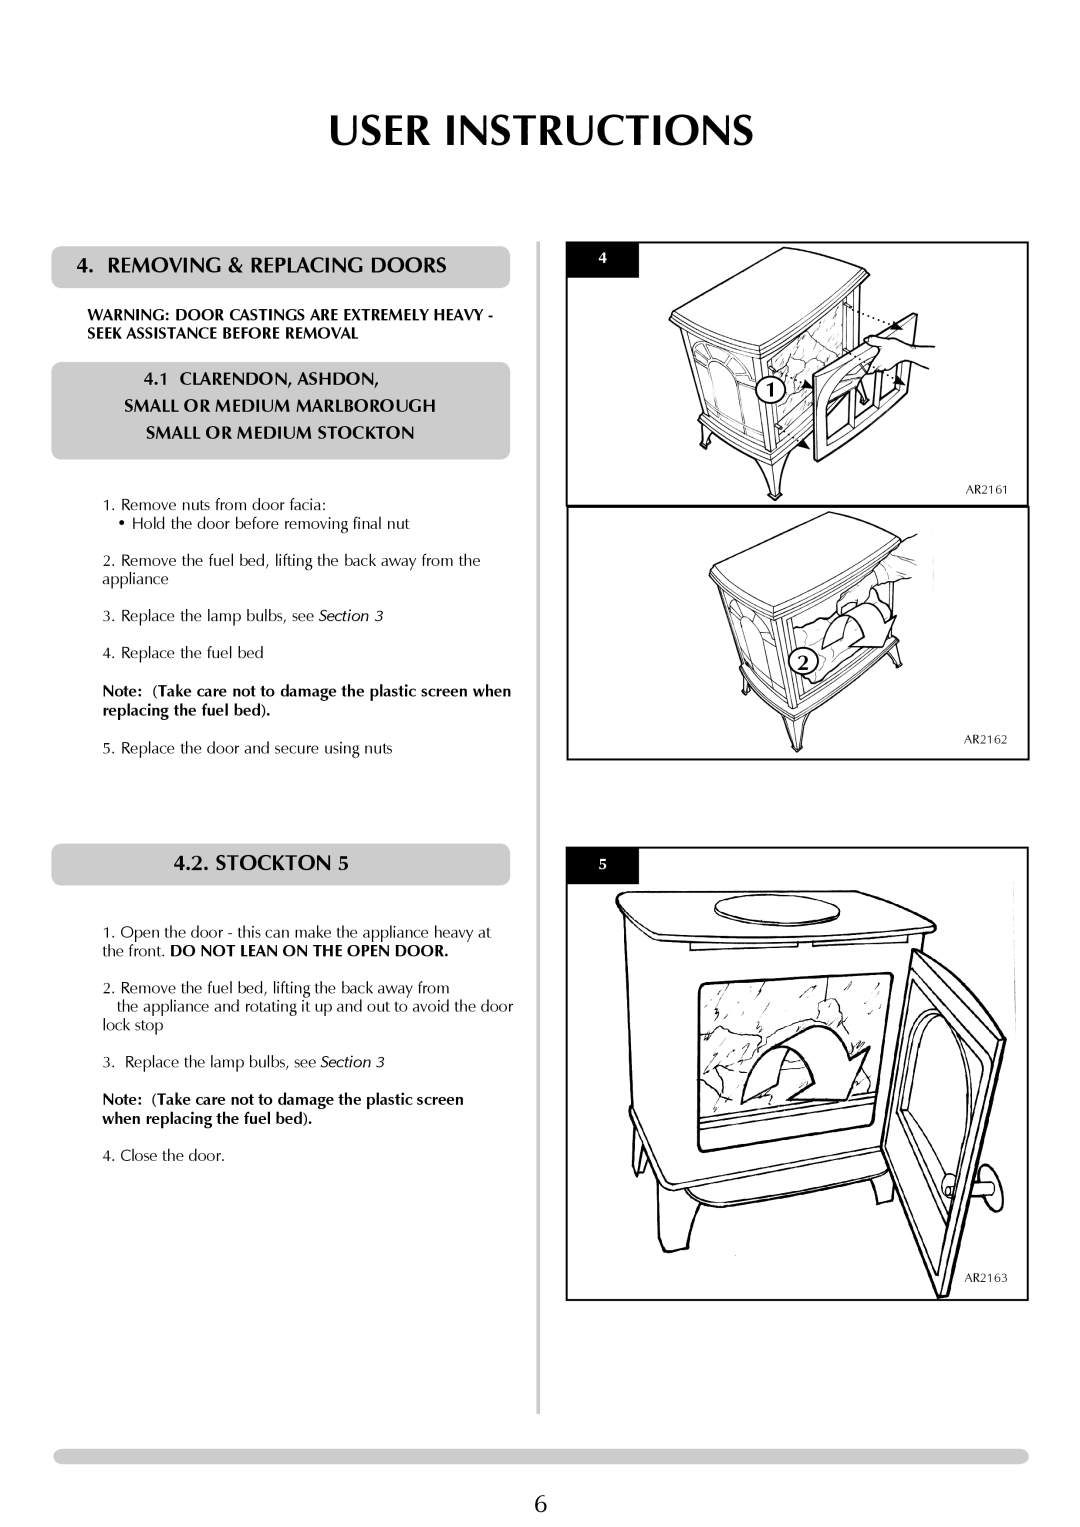 Stovax Electric Stove Range manual User Instructions, Removing & Replacing Doors, stockton, Small Or Medium Stockton 